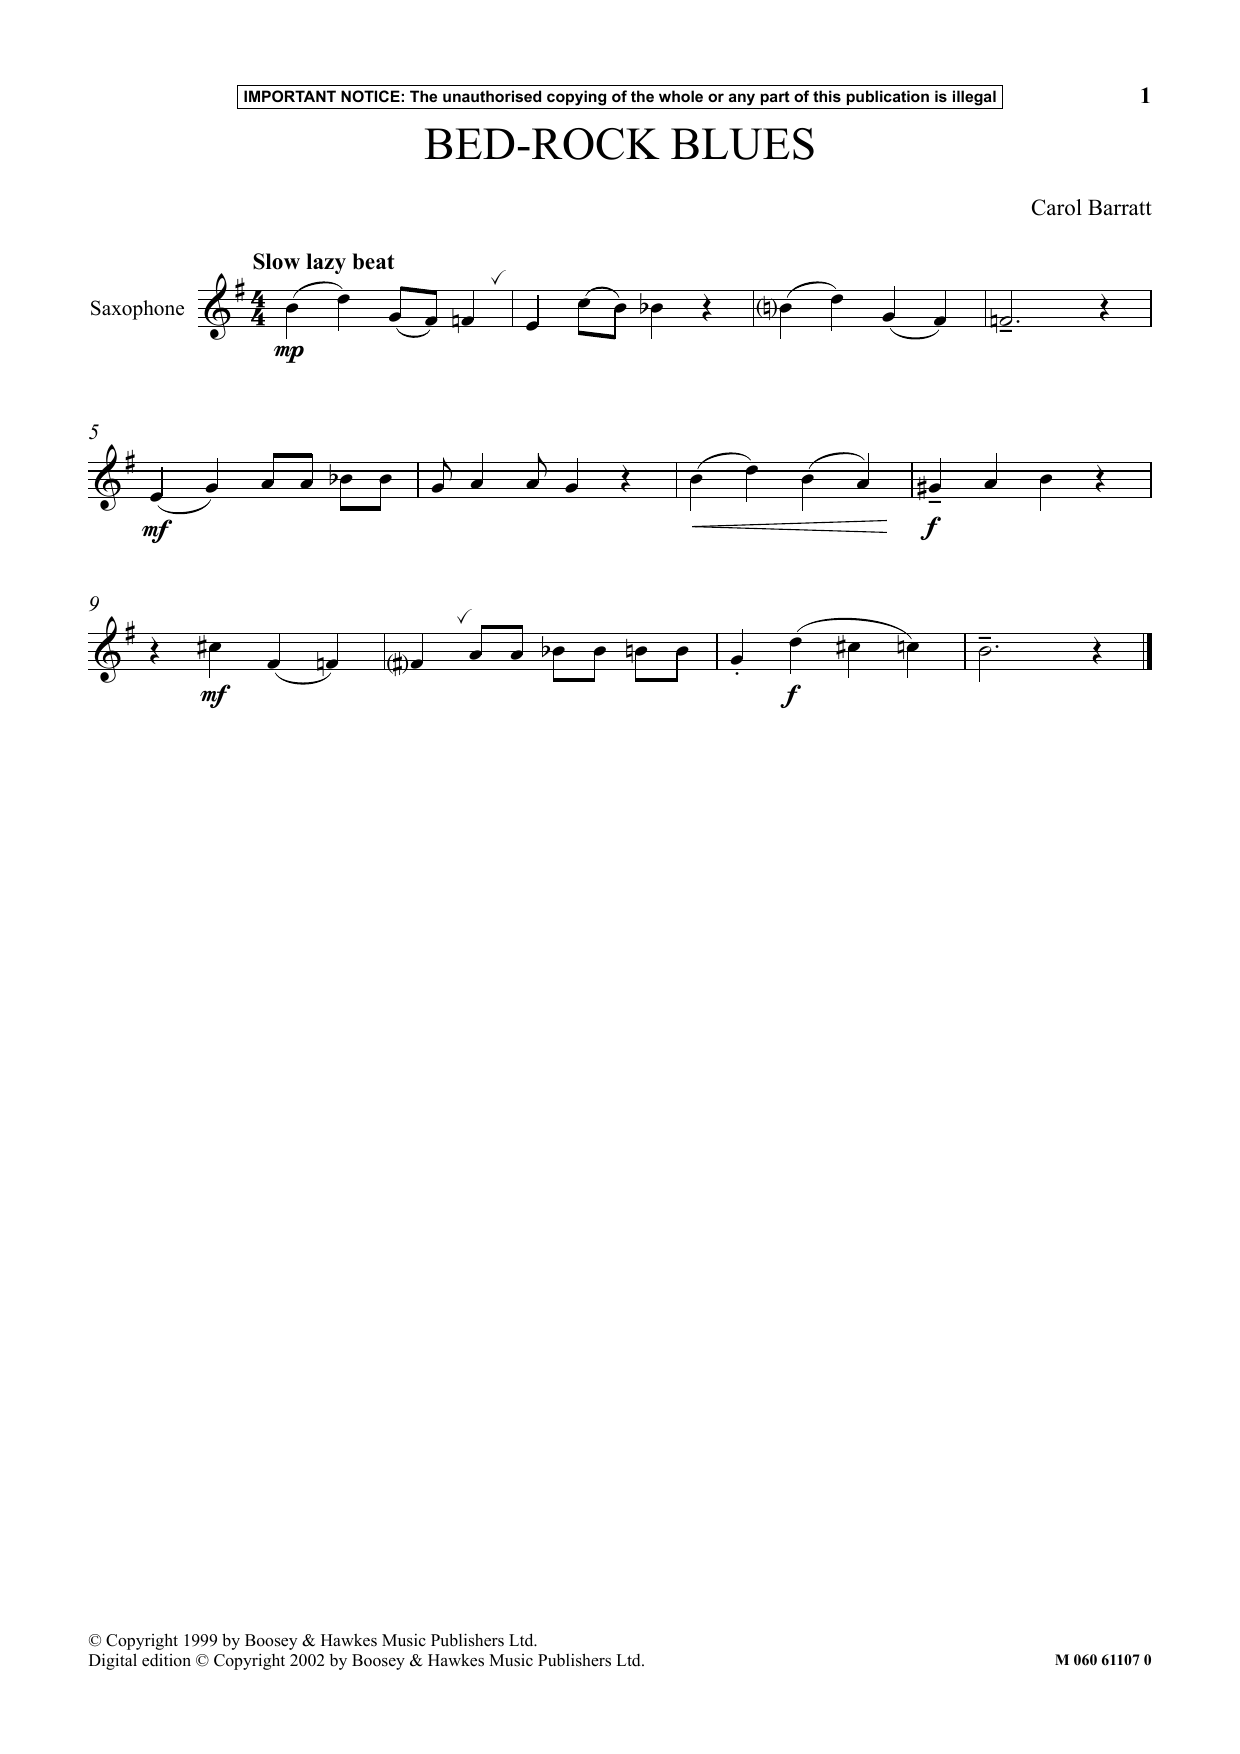 Carol Barratt Bed-Rock Blues Sheet Music Notes & Chords for Instrumental Solo - Download or Print PDF